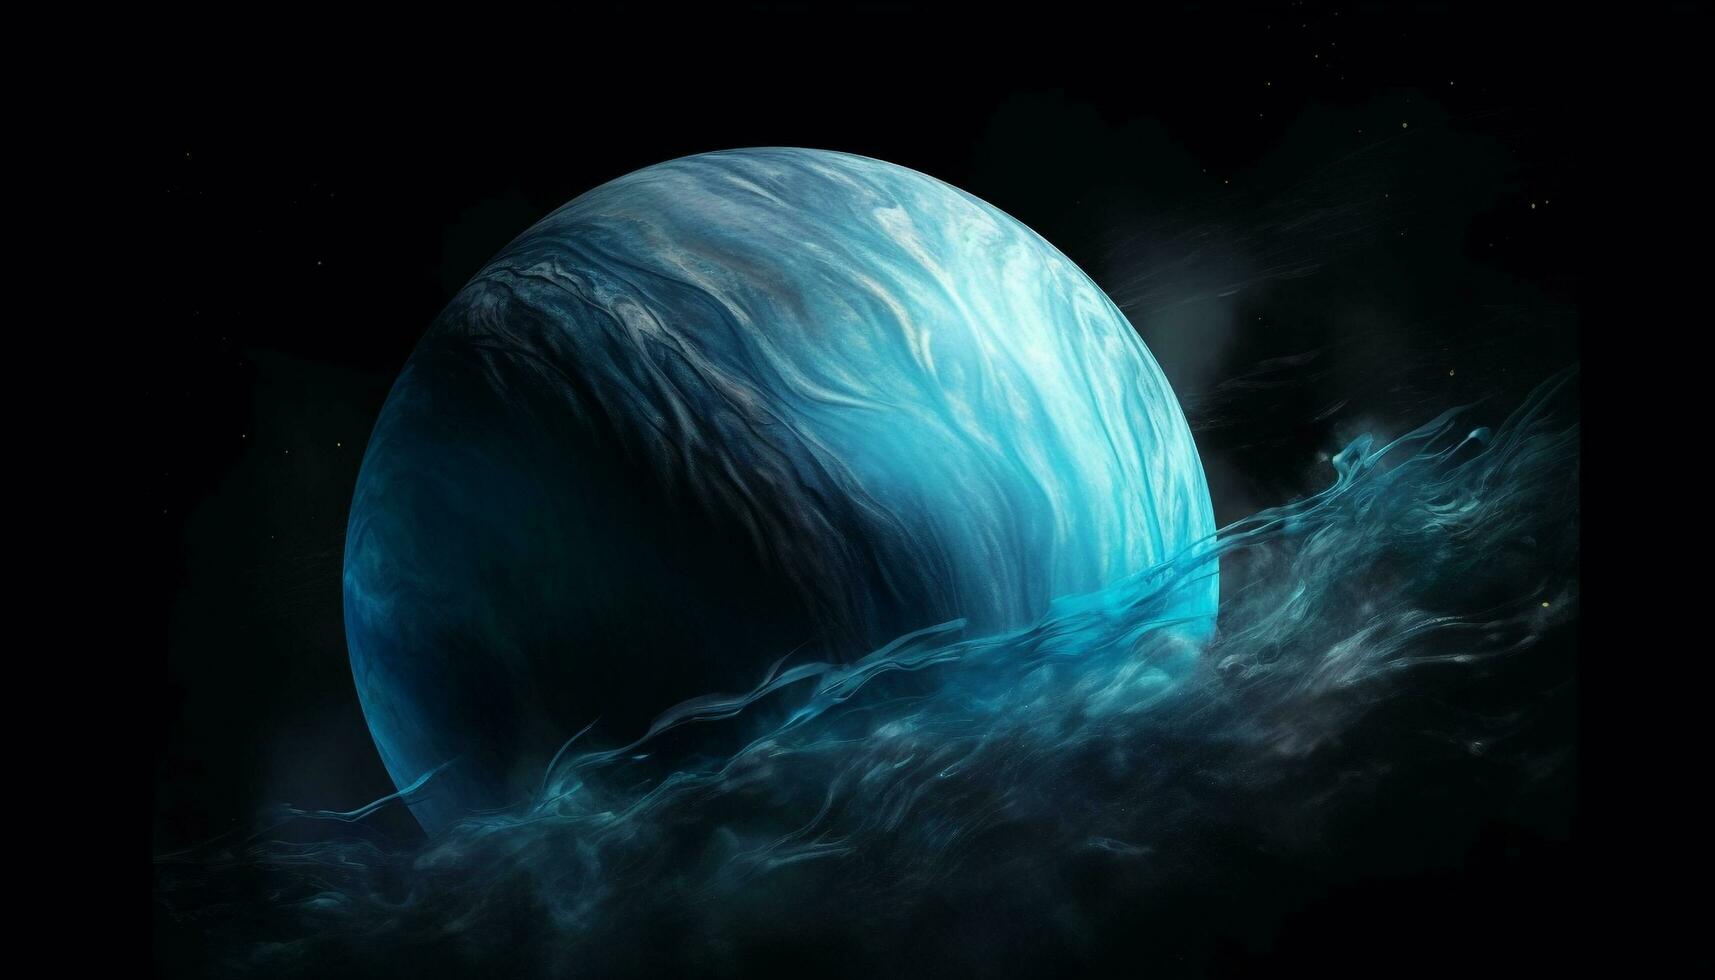 Galaxy sphere orbiting deep blue underwater world generated by AI photo